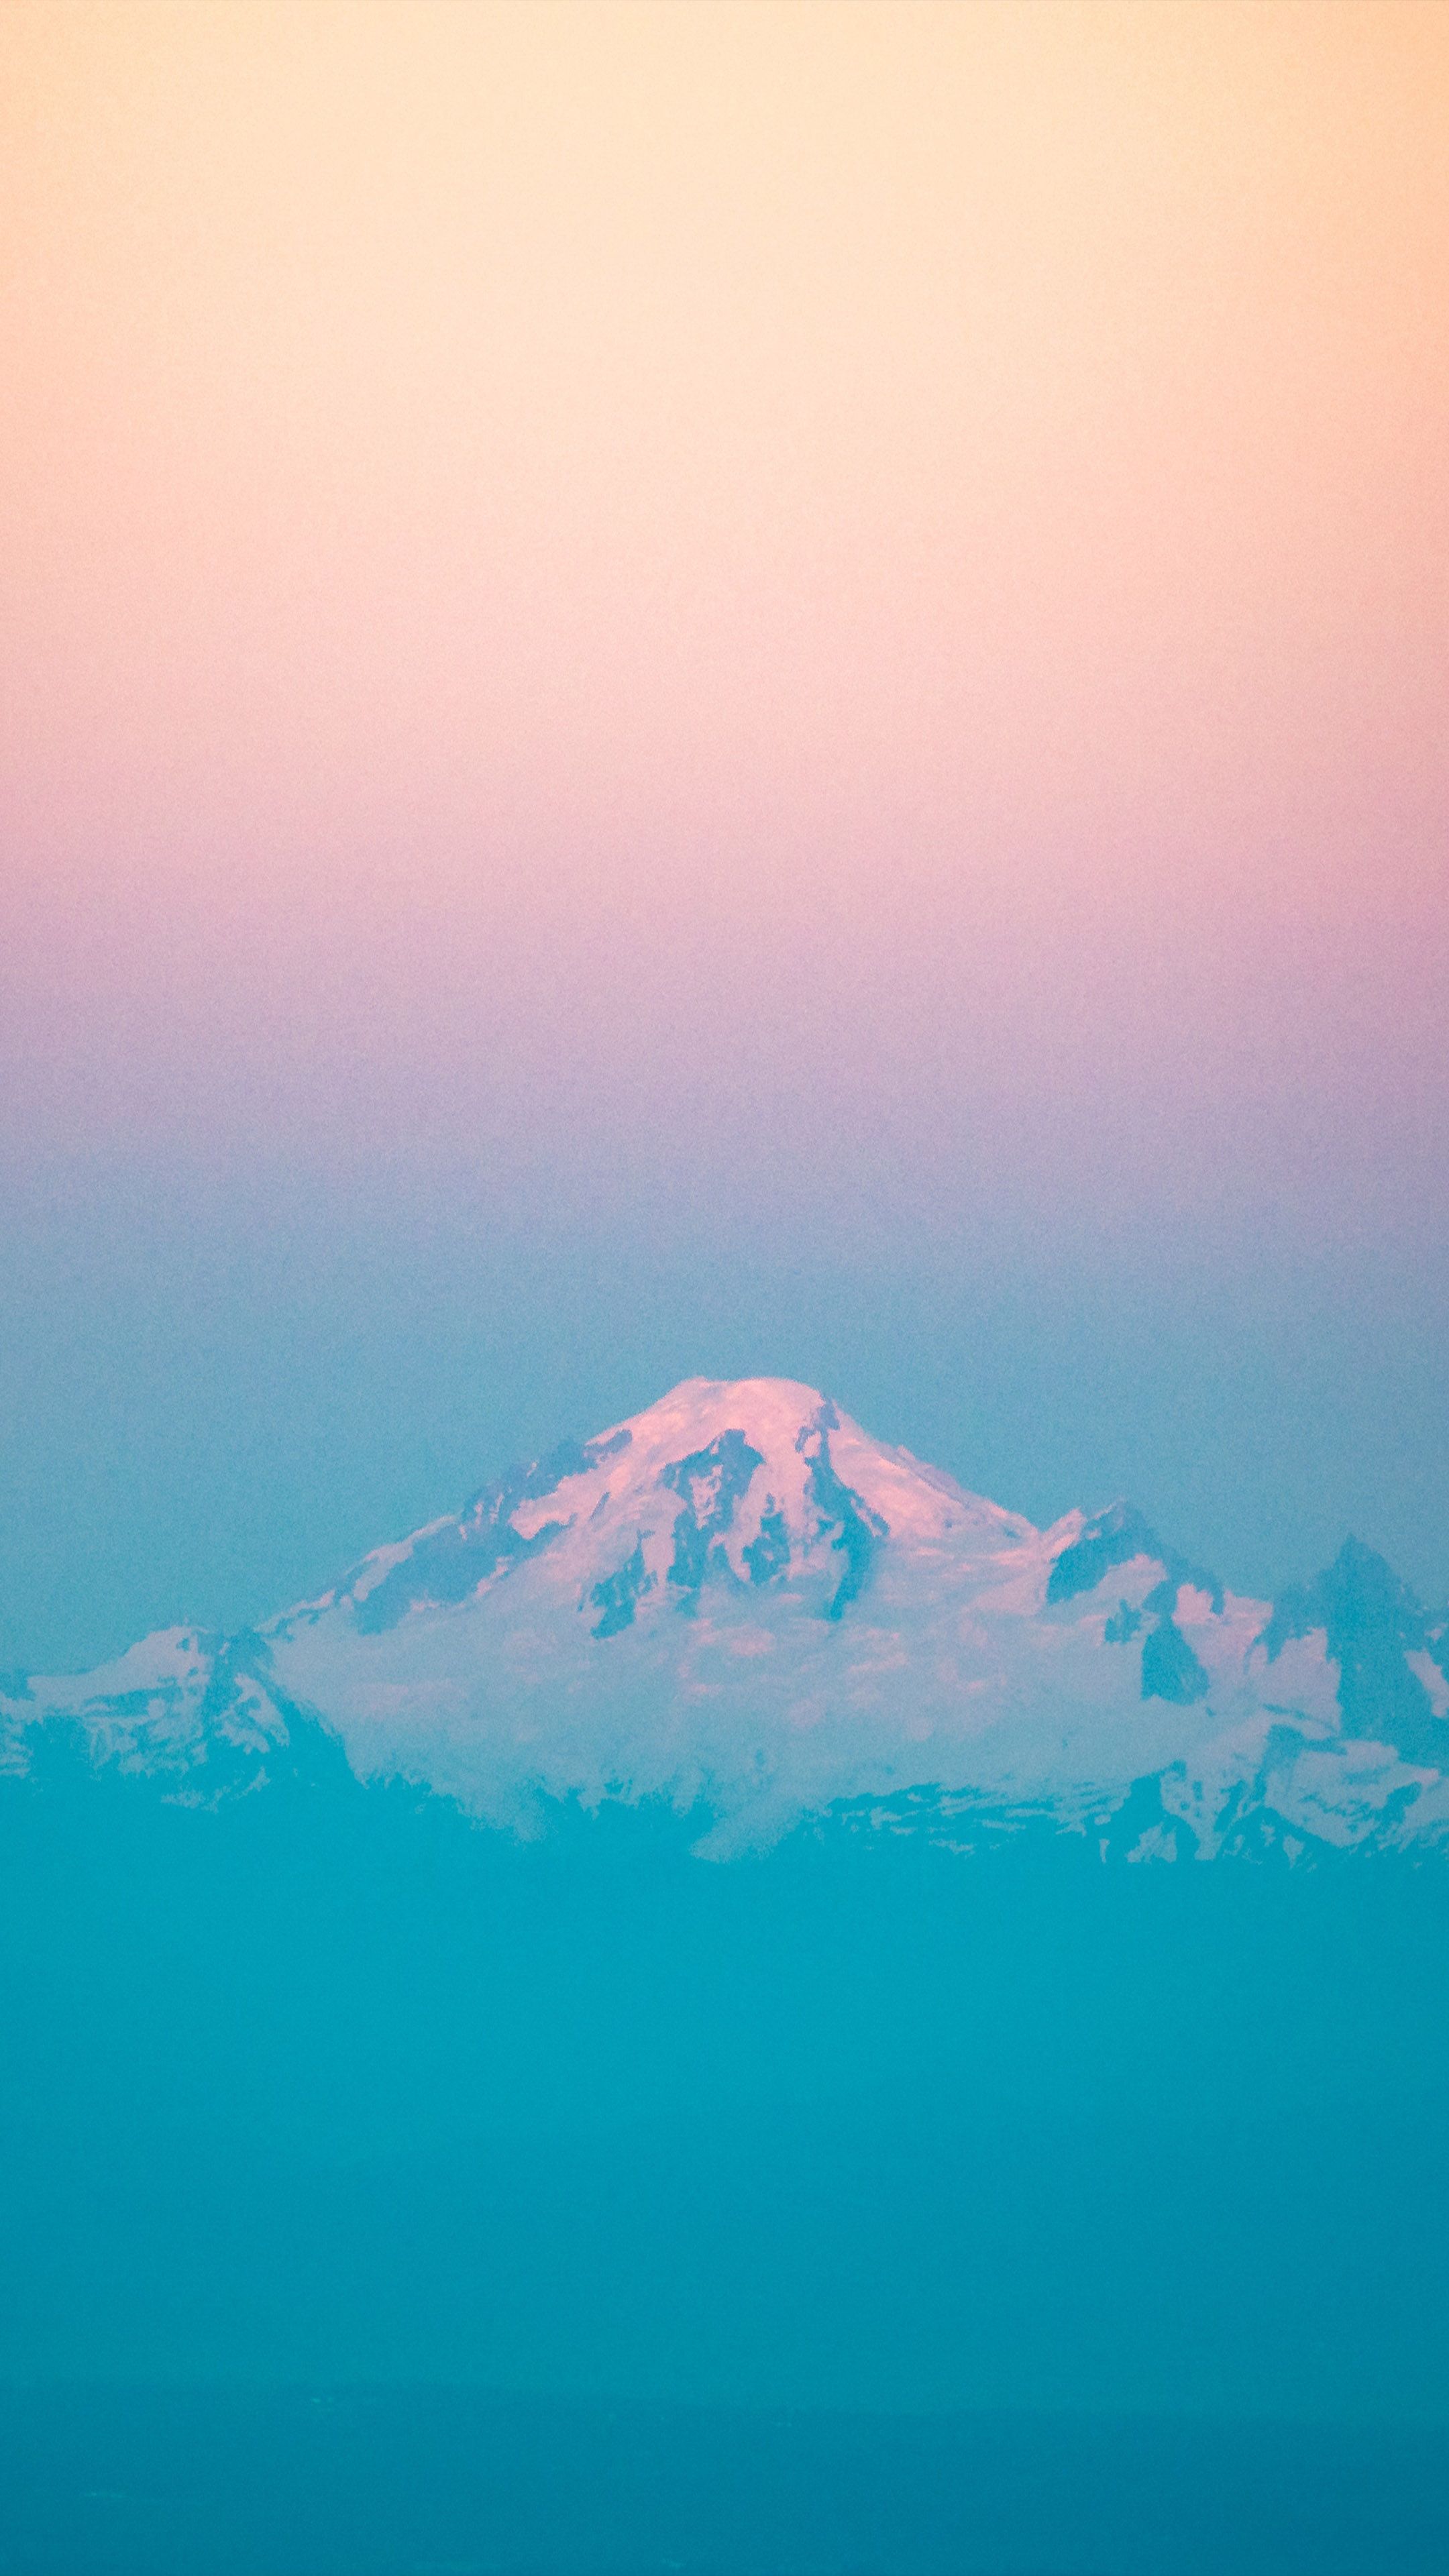 Mountain Peak Sunset Orange Blue Mist .mordeo.org